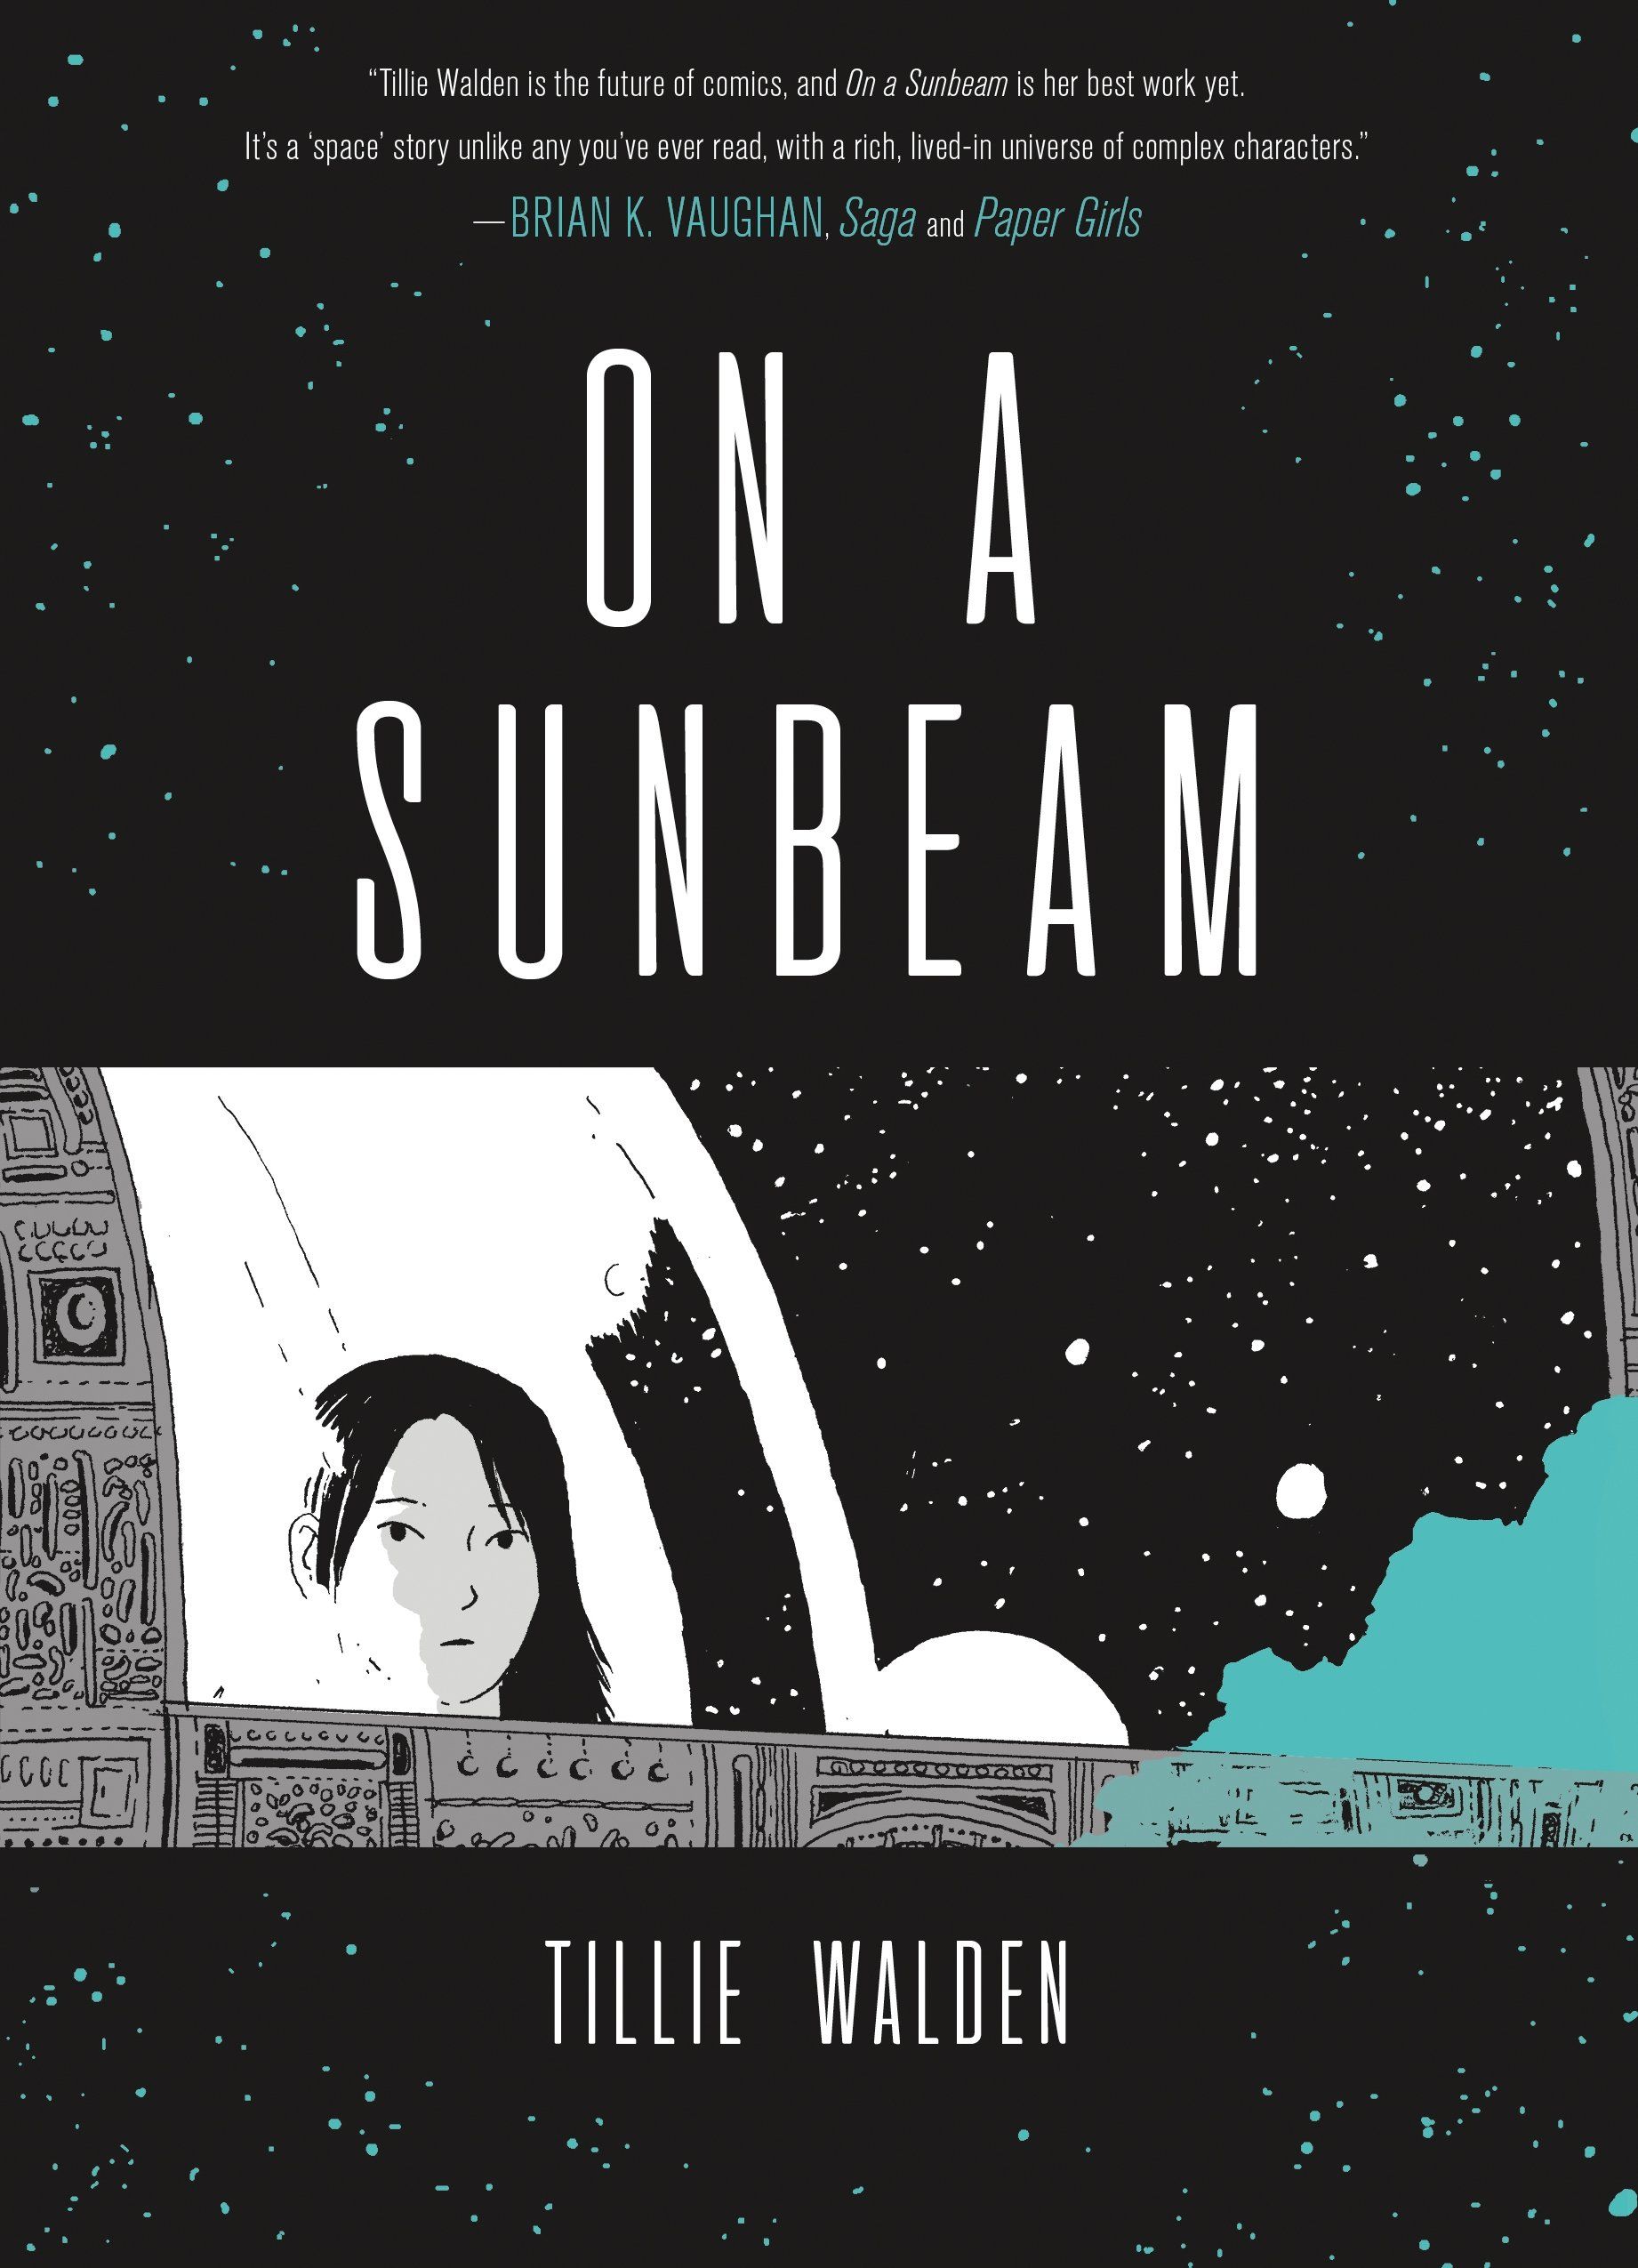 On a Sunbeam Comic Book Cover